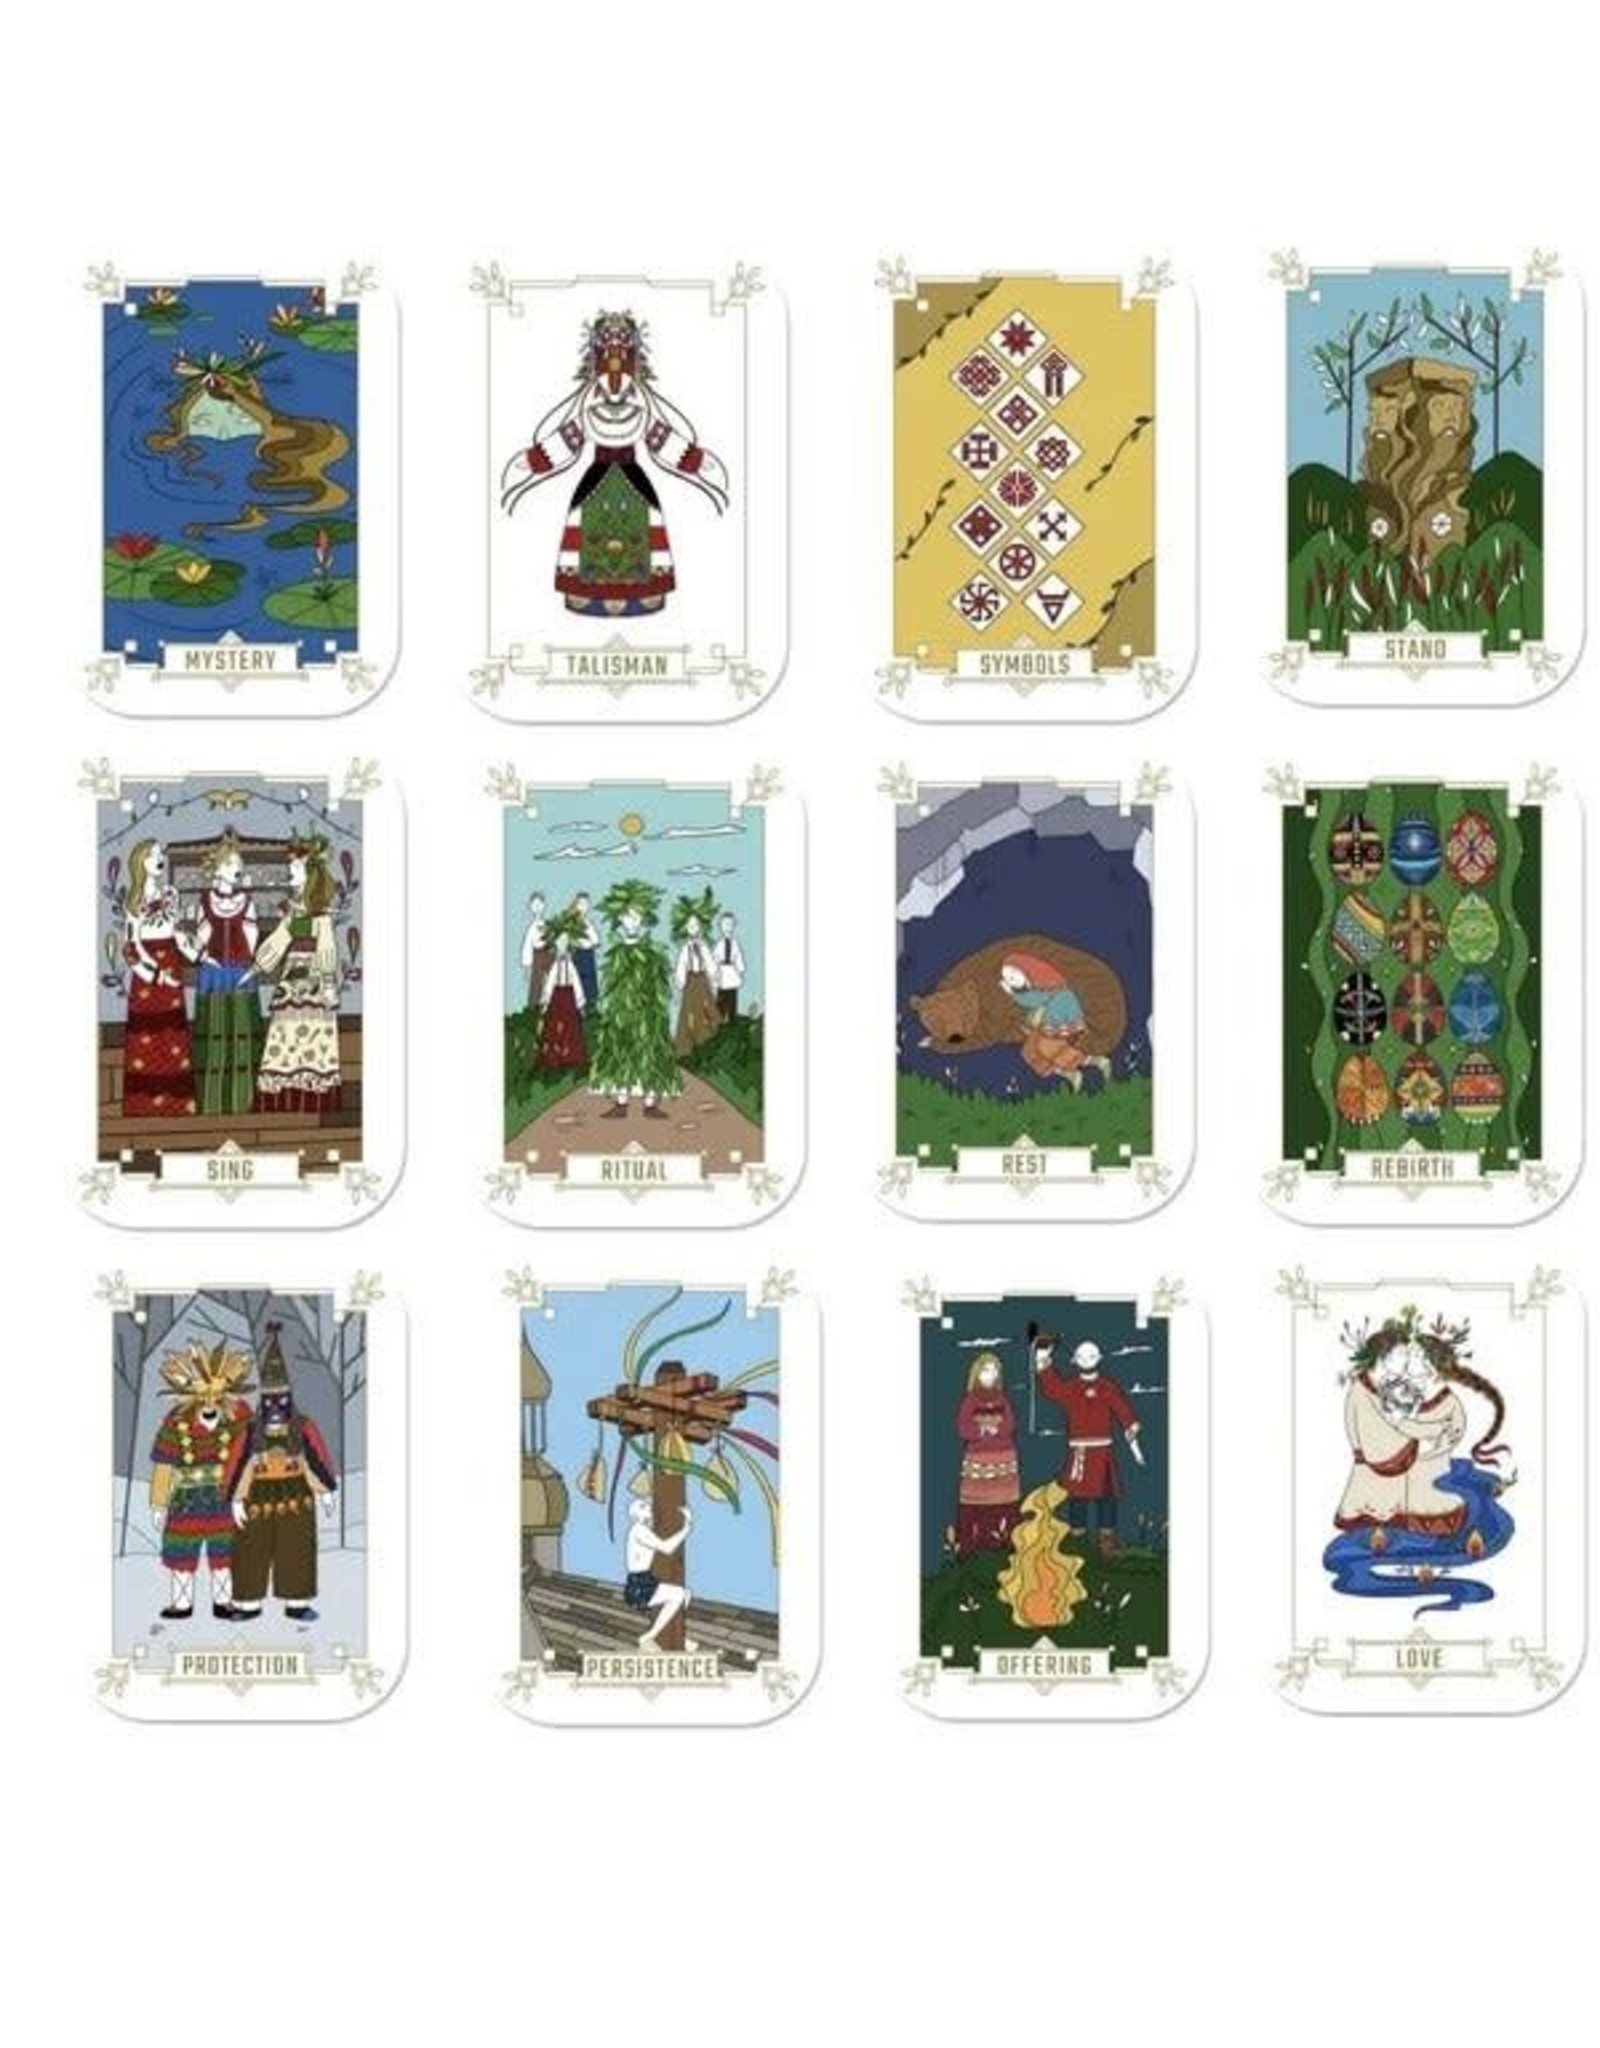 Magick and Mediums Slavic Oracle Tarot Cards